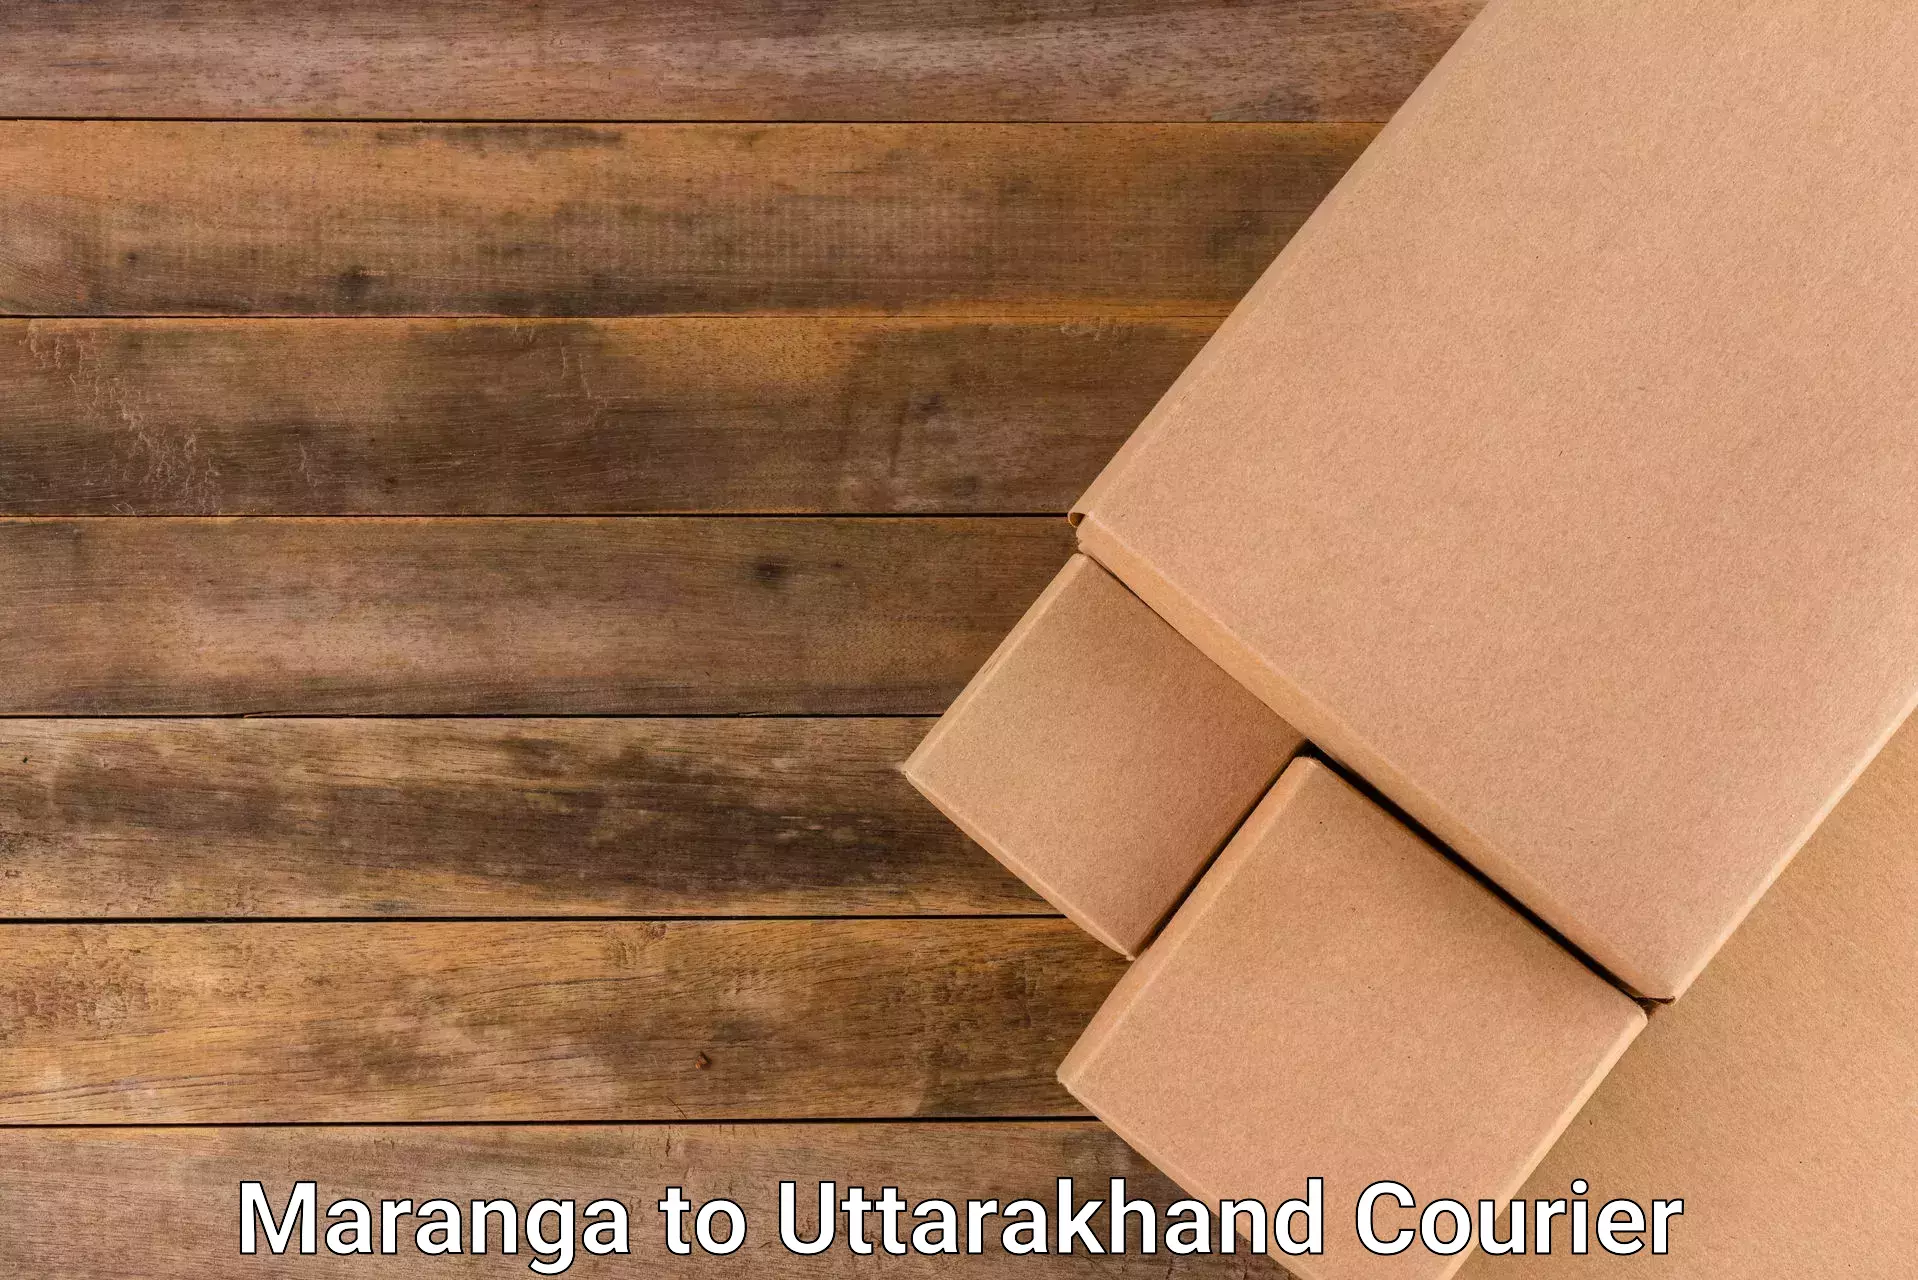 Efficient order fulfillment in Maranga to Bhagwanpur